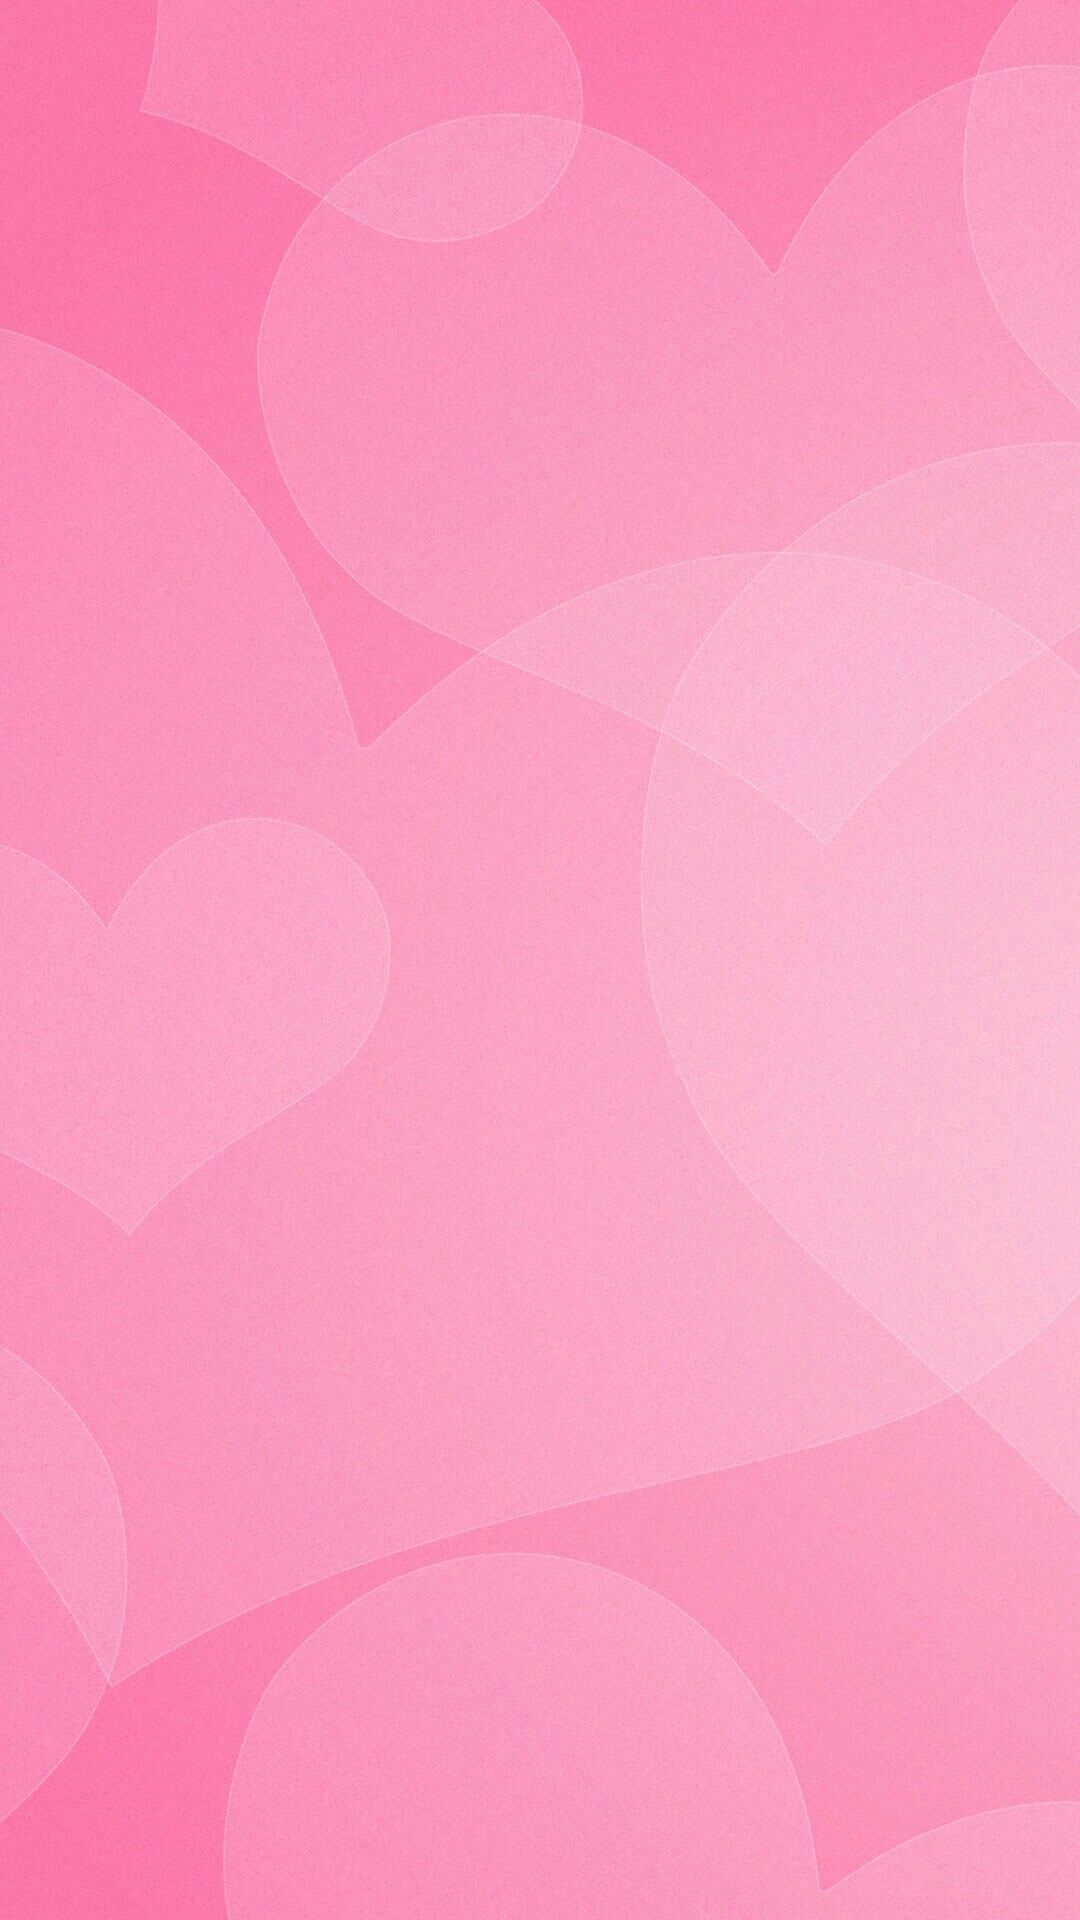 Debbie On Pink Plain Wallpaper iPhone Desktop